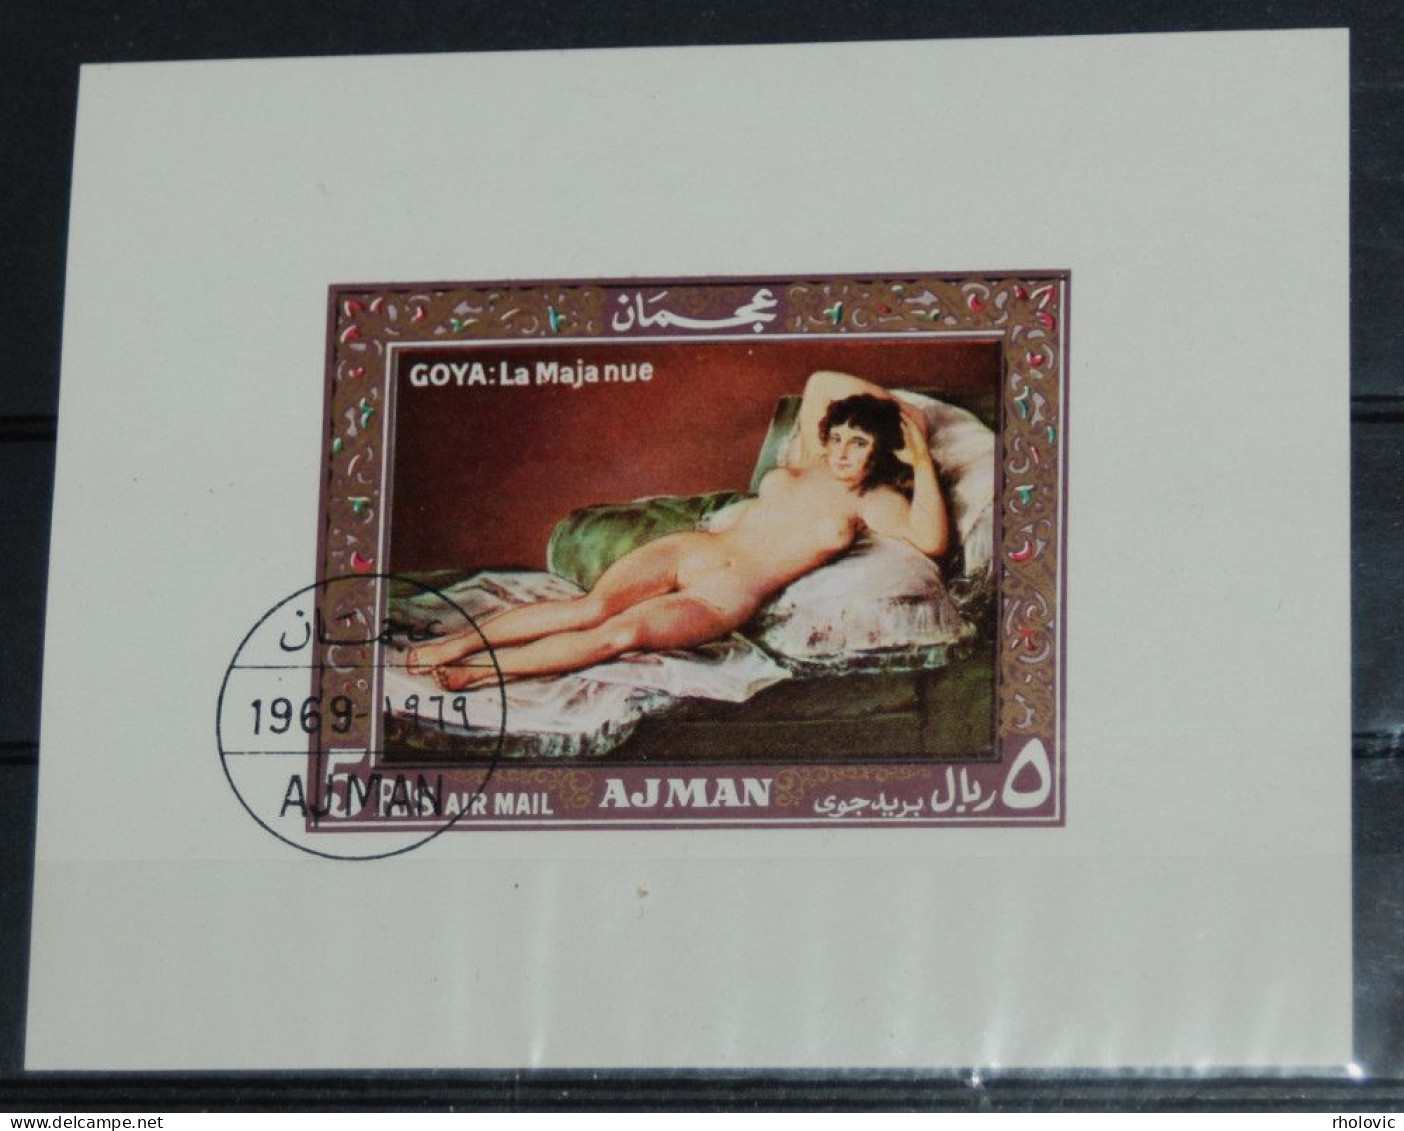 AJMAN 1969, Paintings, Art, Nude, Goya, Imperf, Mi #B120, Souvenir Sheet, Used - Nudes